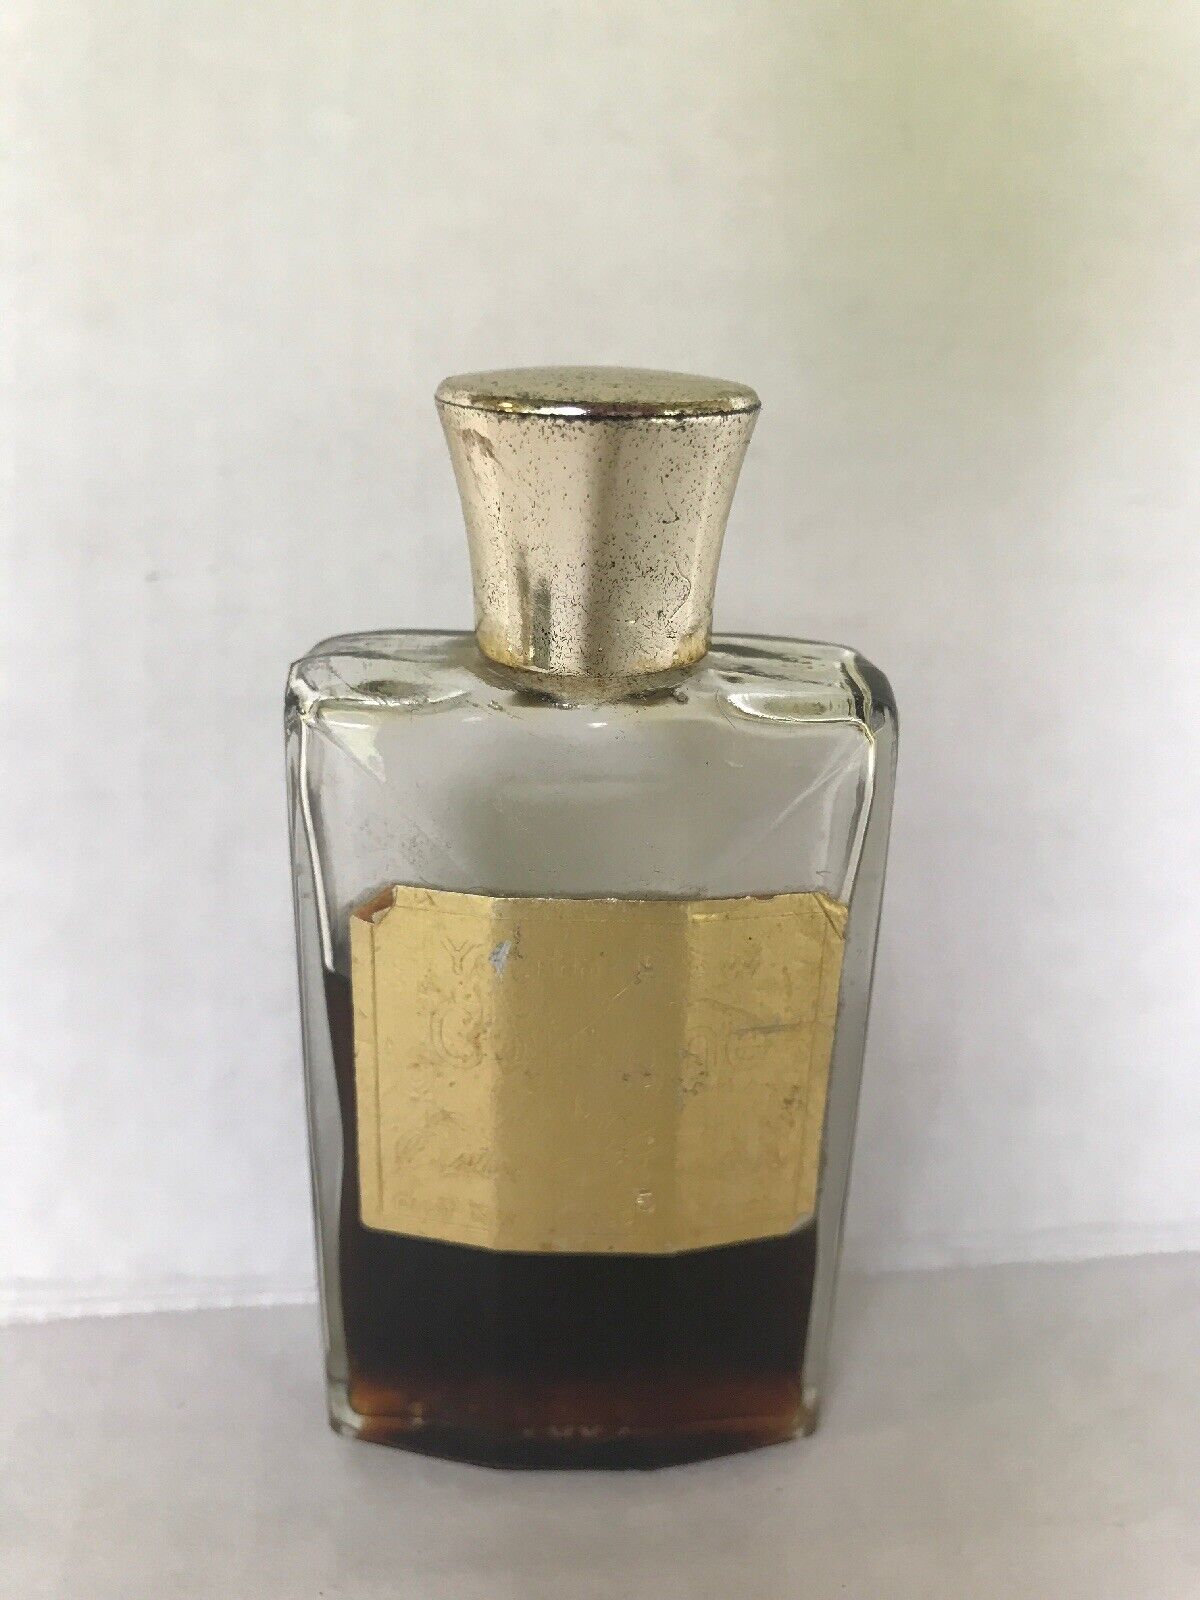 Vintage Youth Dew by Estee Lauder Cologne 1 oz original scent splash from USA